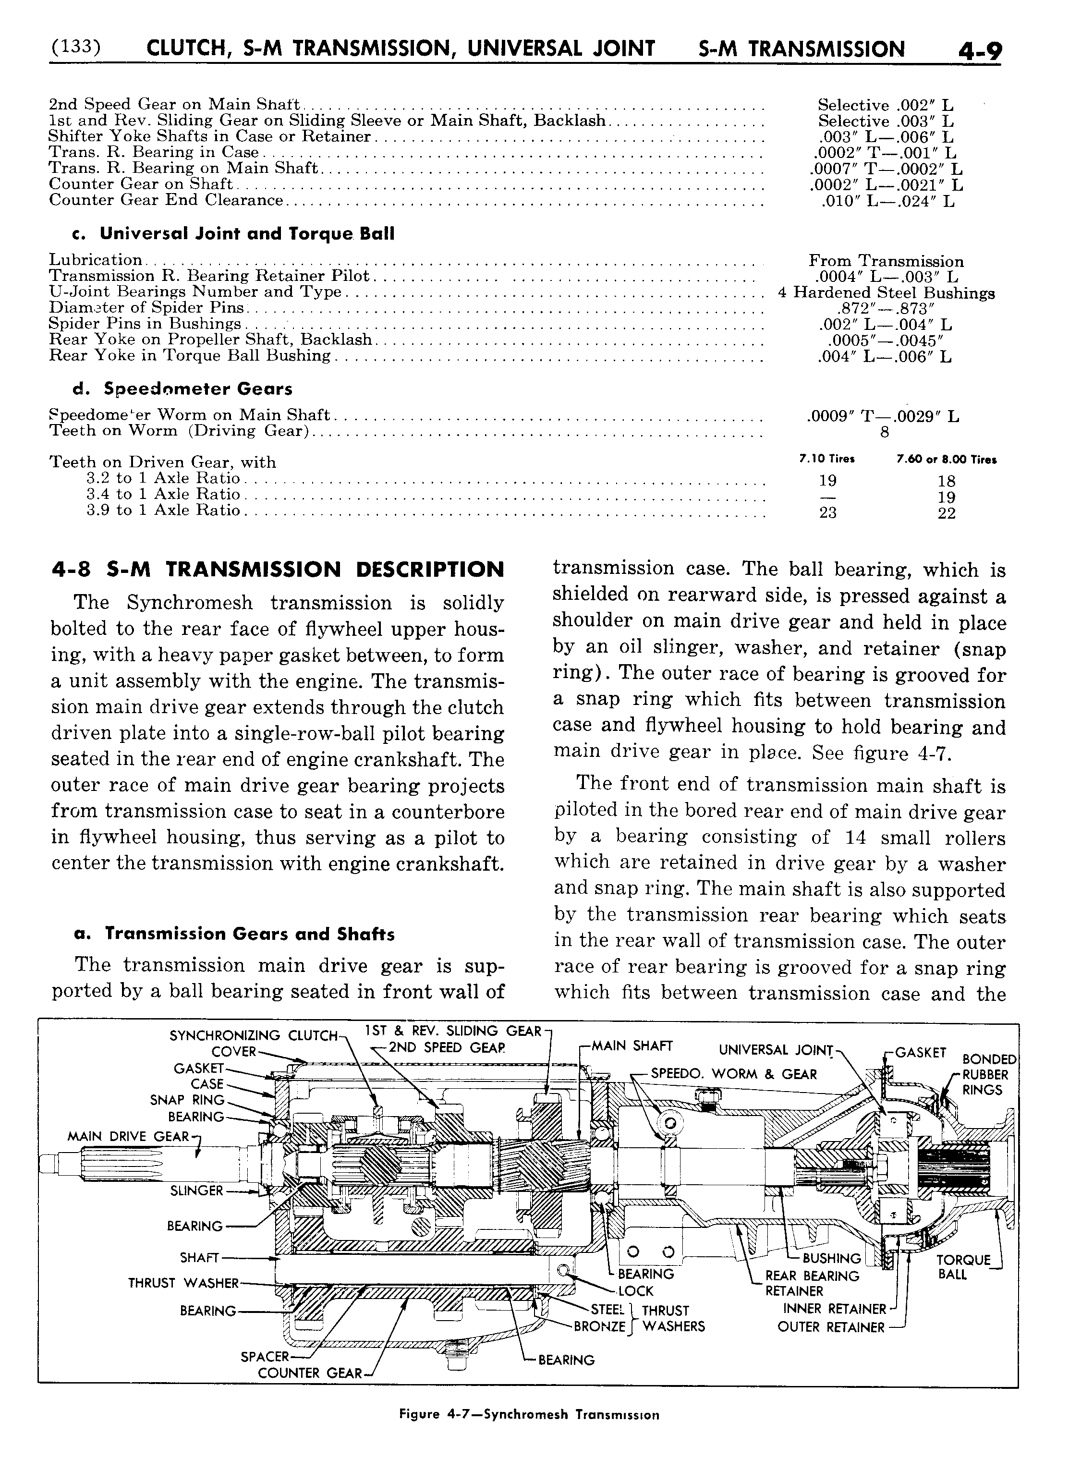 n_05 1956 Buick Shop Manual - Clutch & Trans-009-009.jpg